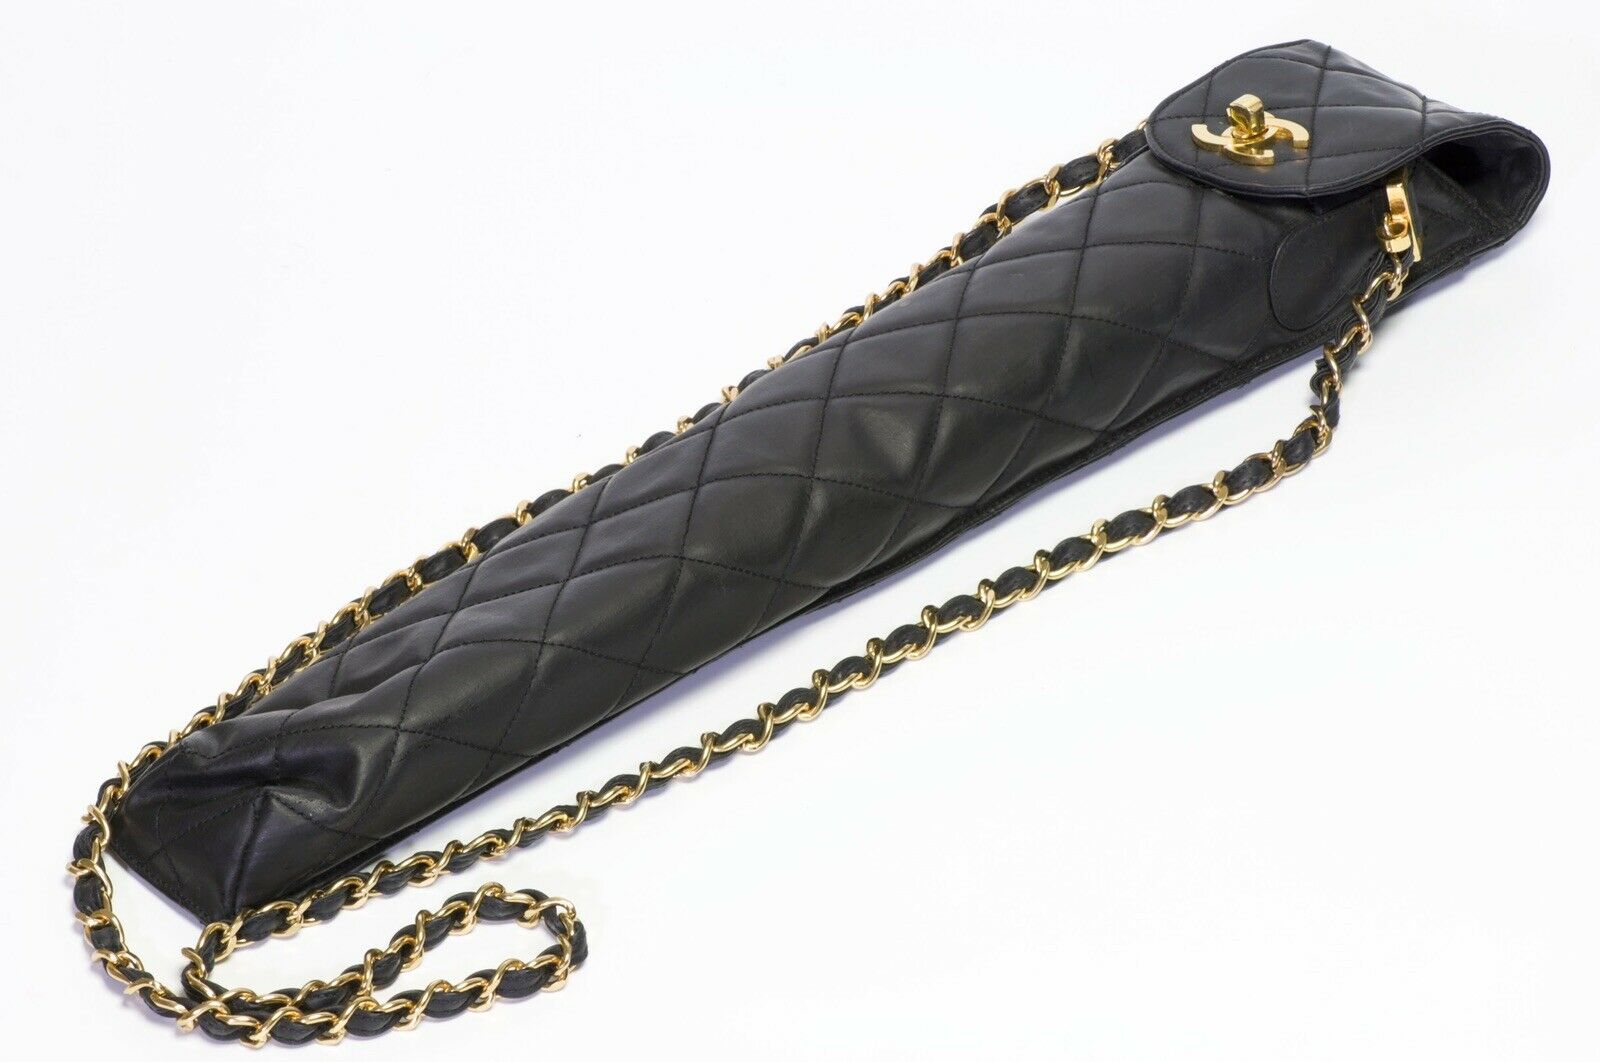 Vintage 1996 CHANEL Paris CC Black Quilted Leather Crossbody Umbrella Case Bag